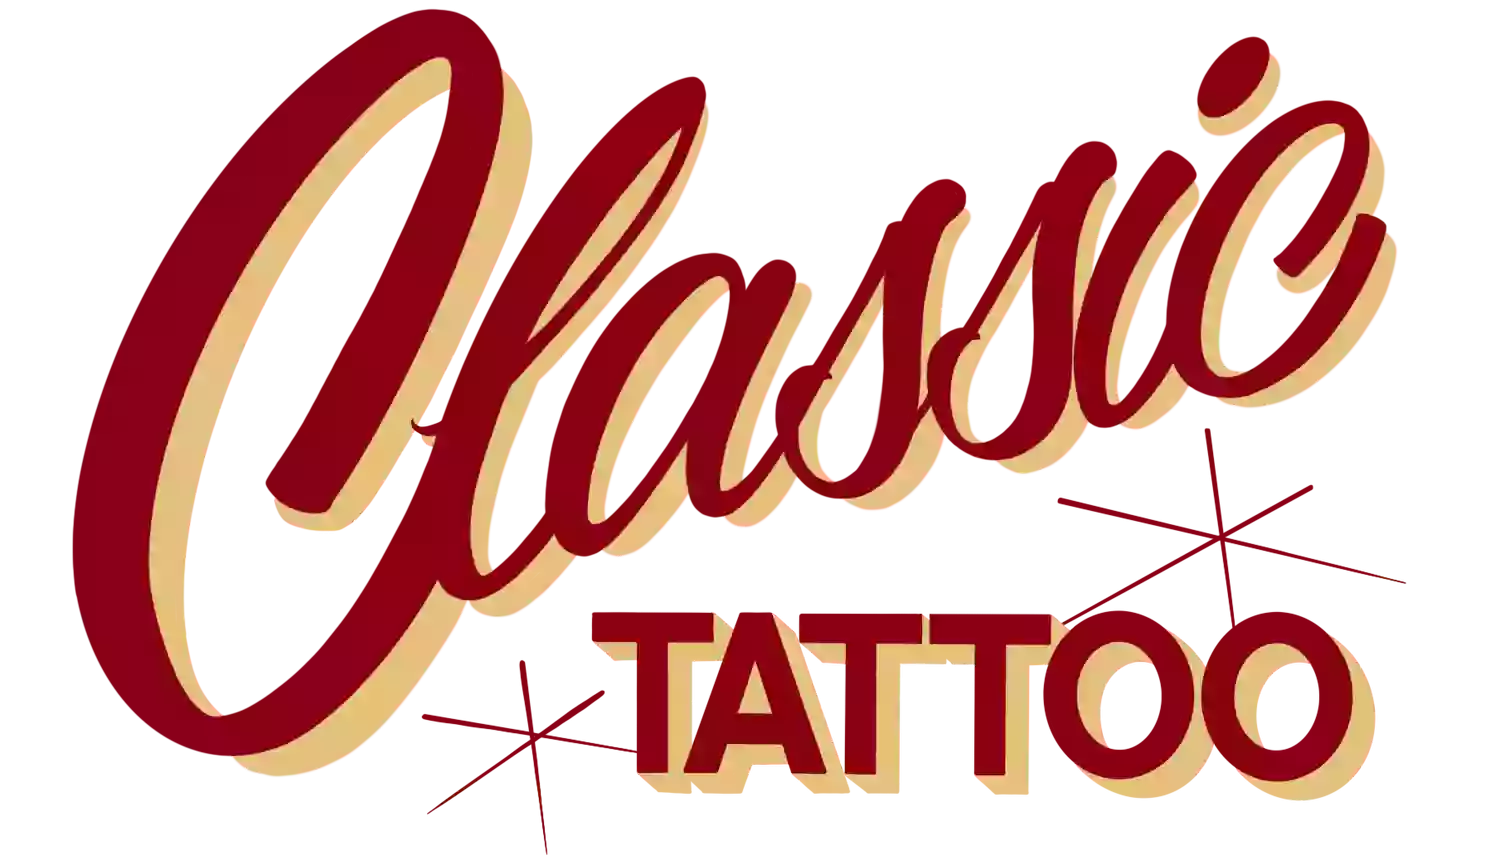 Classic Tattoo Parlor